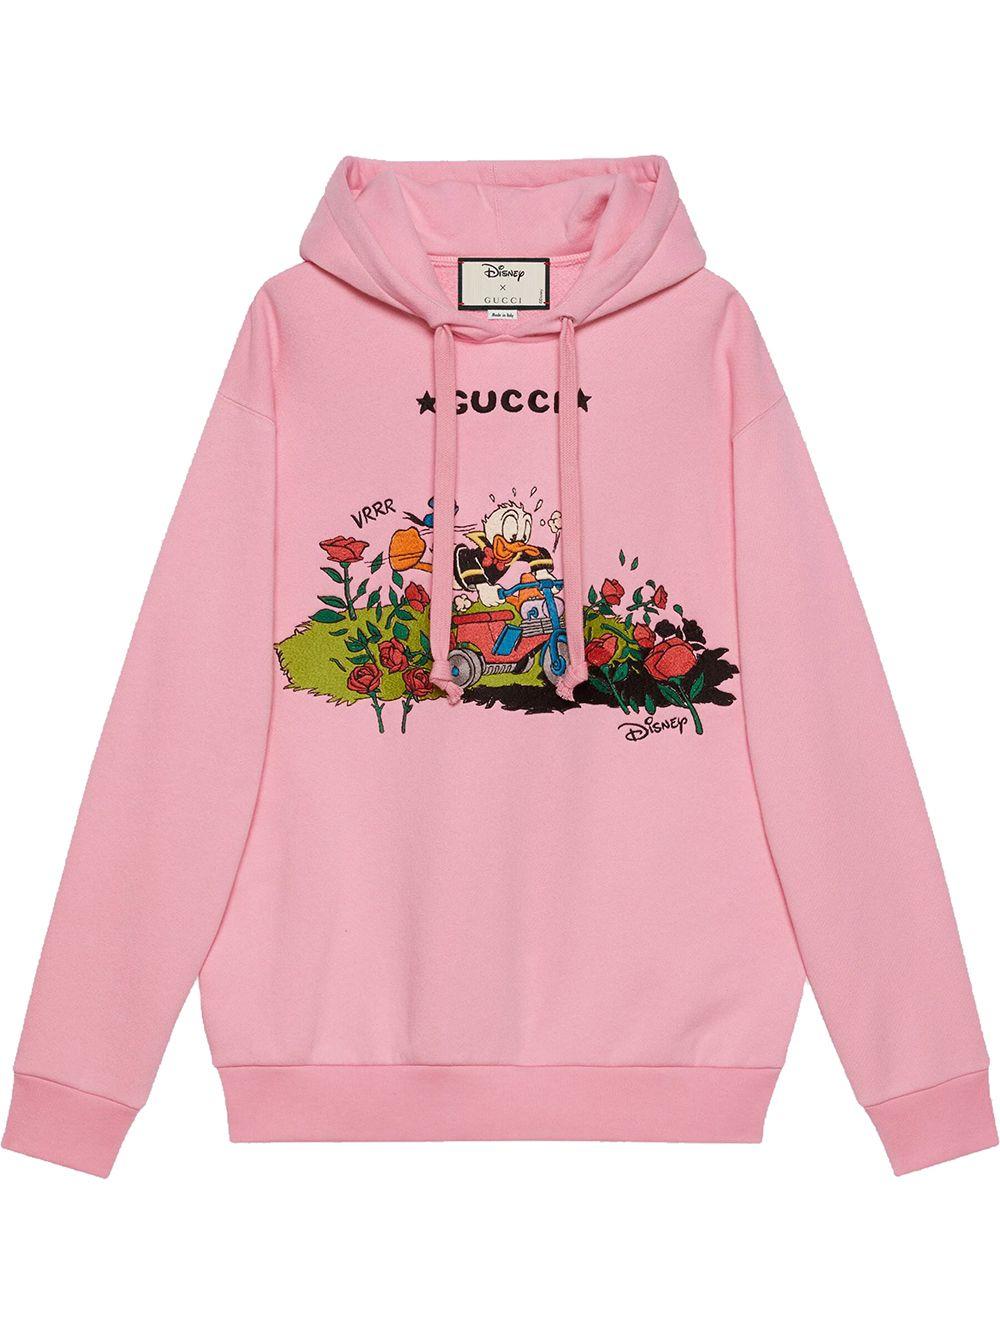 Gucci X Disney Donald Duck Logo Hoodie in Pink | Lyst Australia